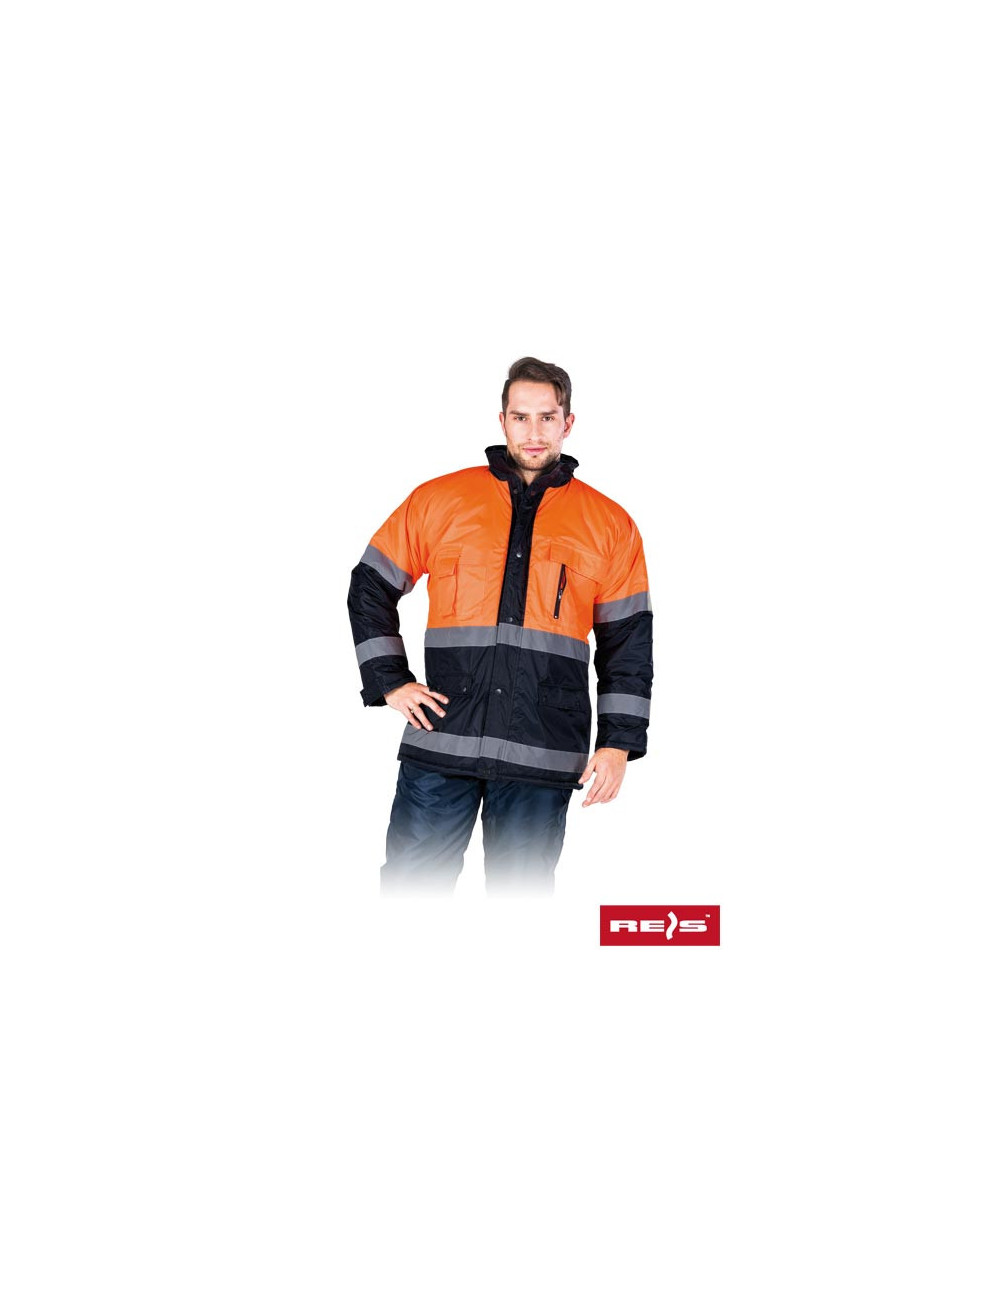 Protective jacket insulated blue-orange-j pg orange-navy Reis